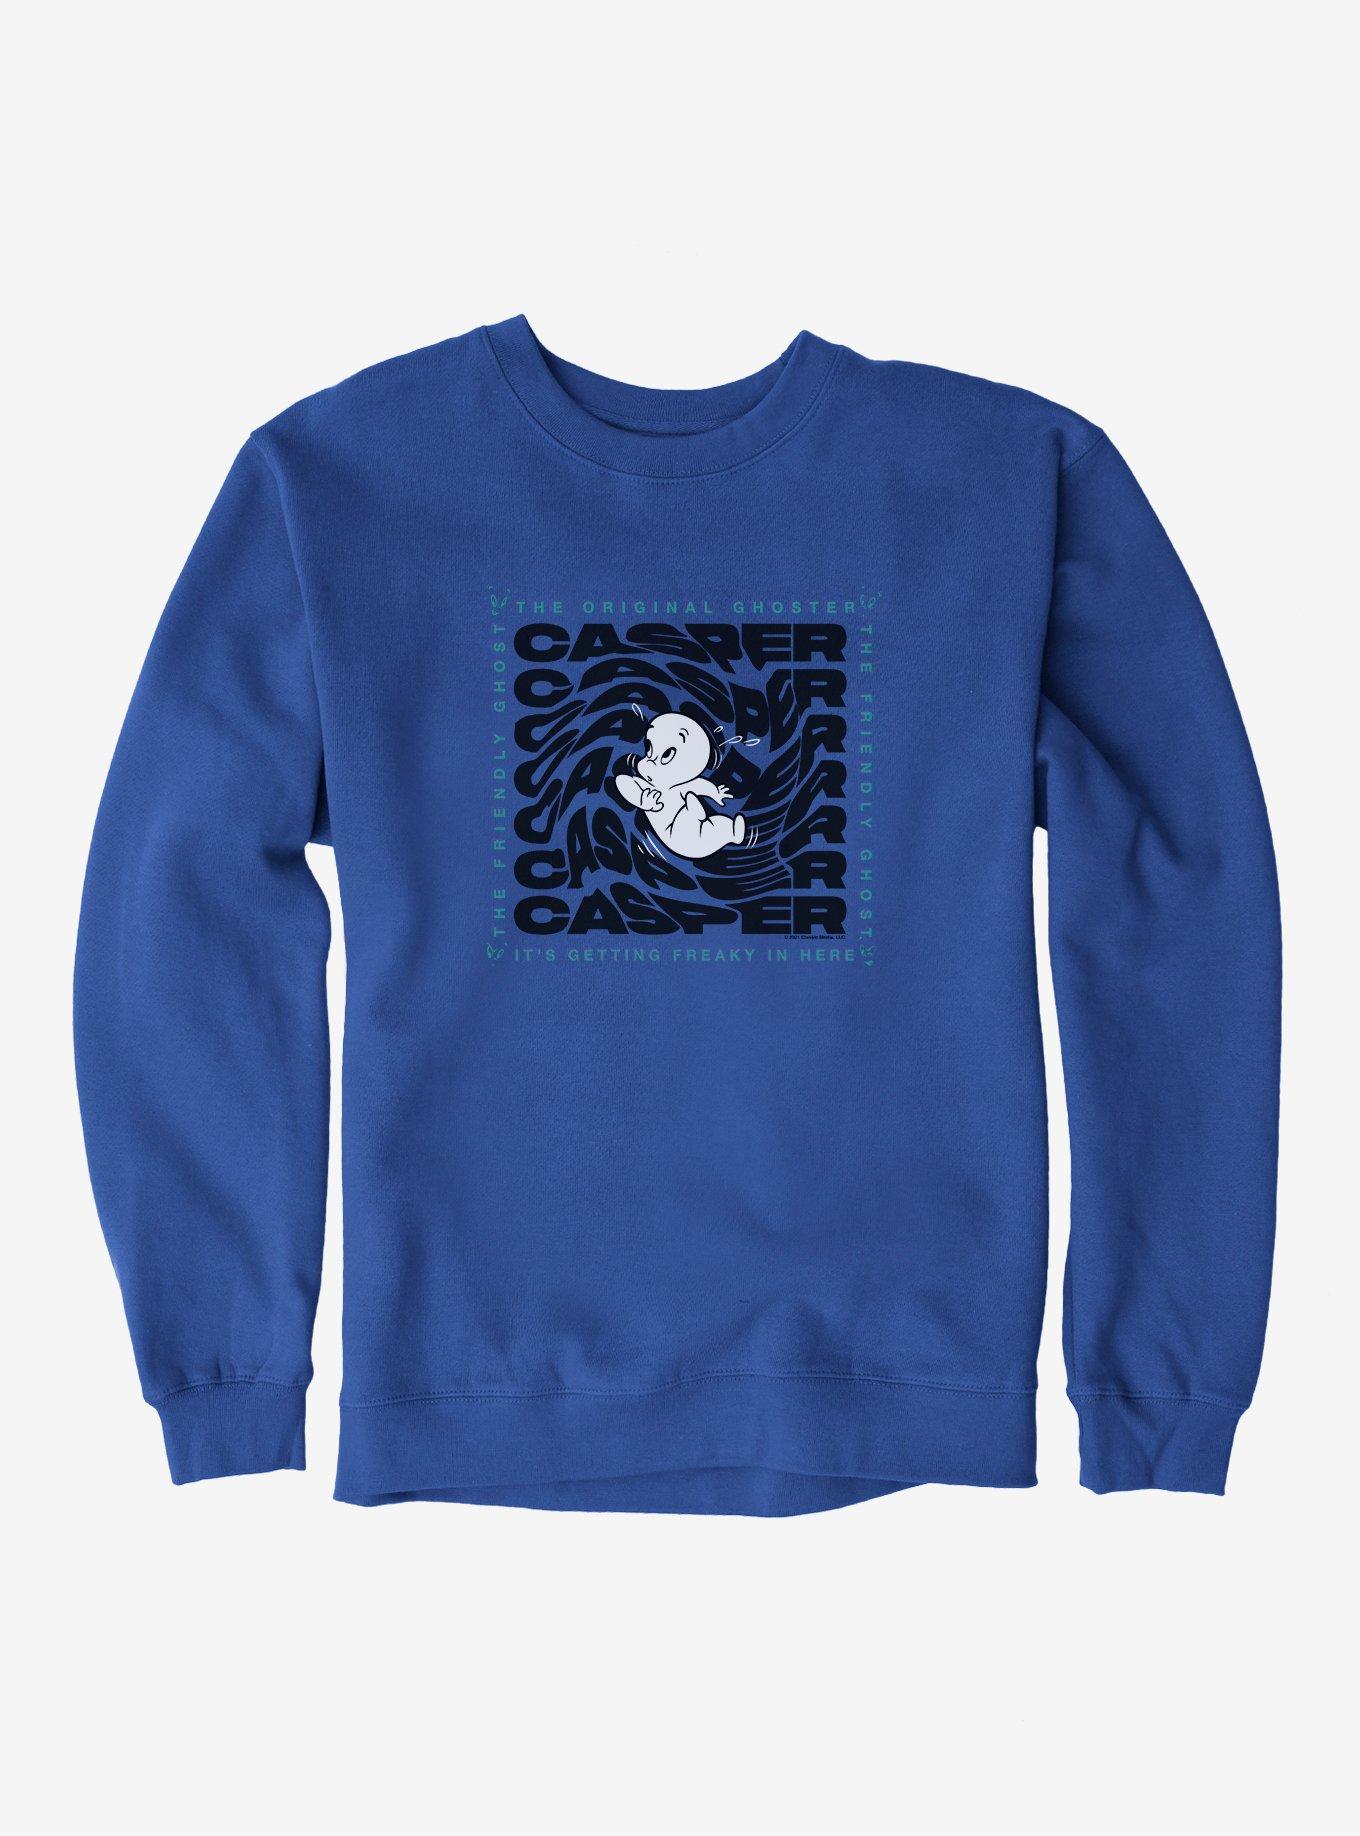 Casper The Friendly Ghost Virtual Raver Freaky Here Sweatshirt, ROYAL BLUE, hi-res